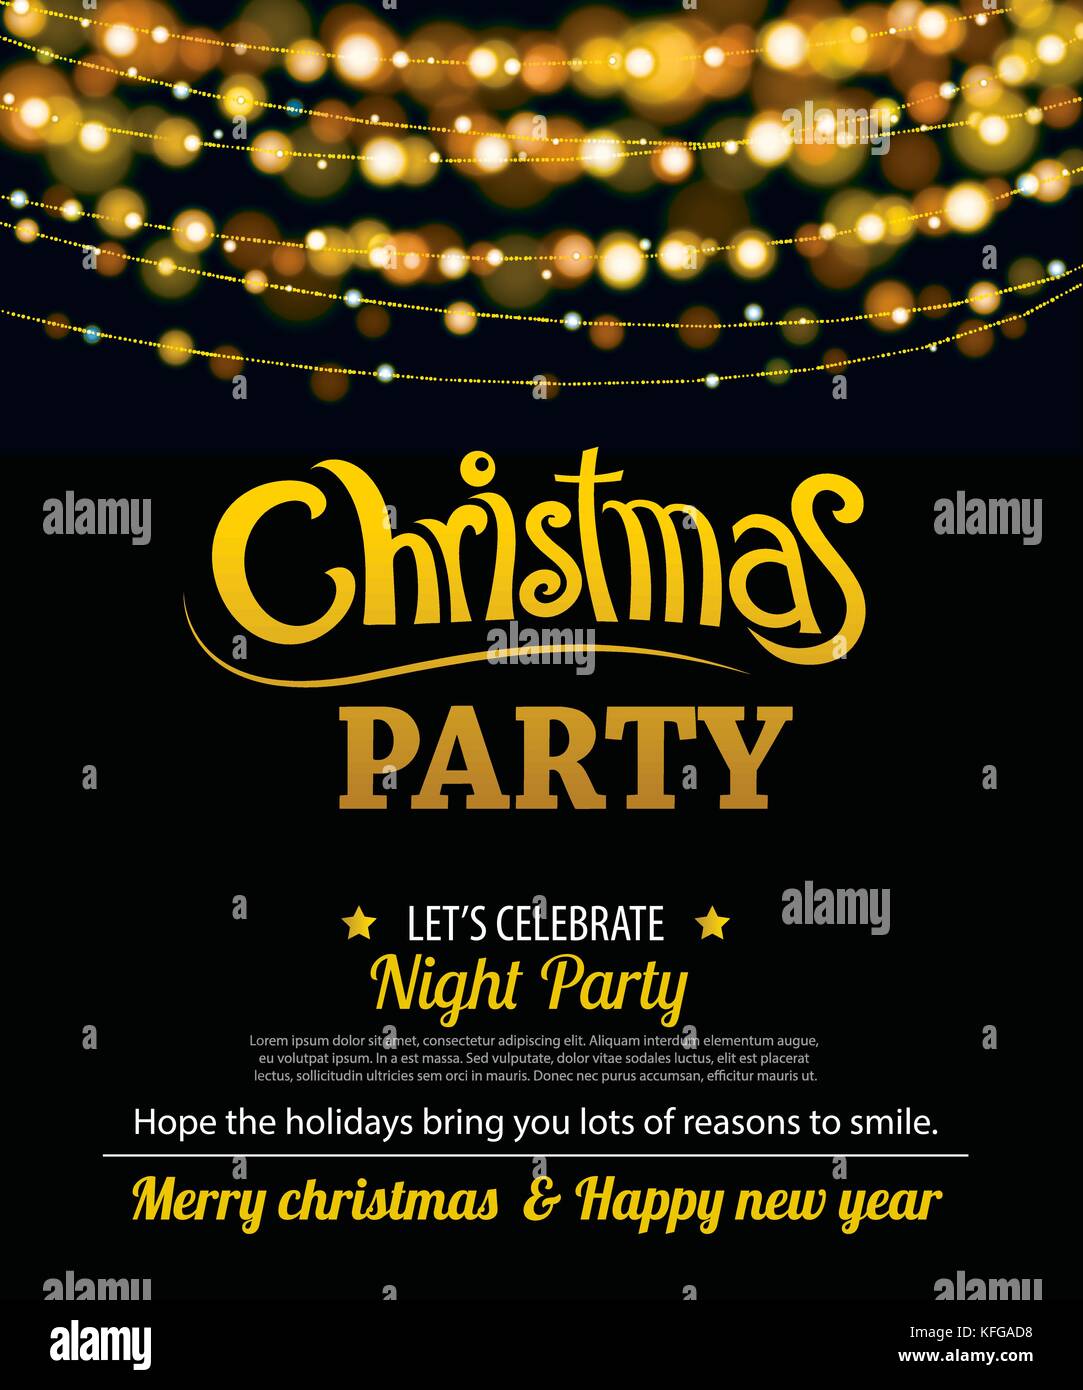 Christmas Event Poster For 2021 Printable And Downloadable Casma